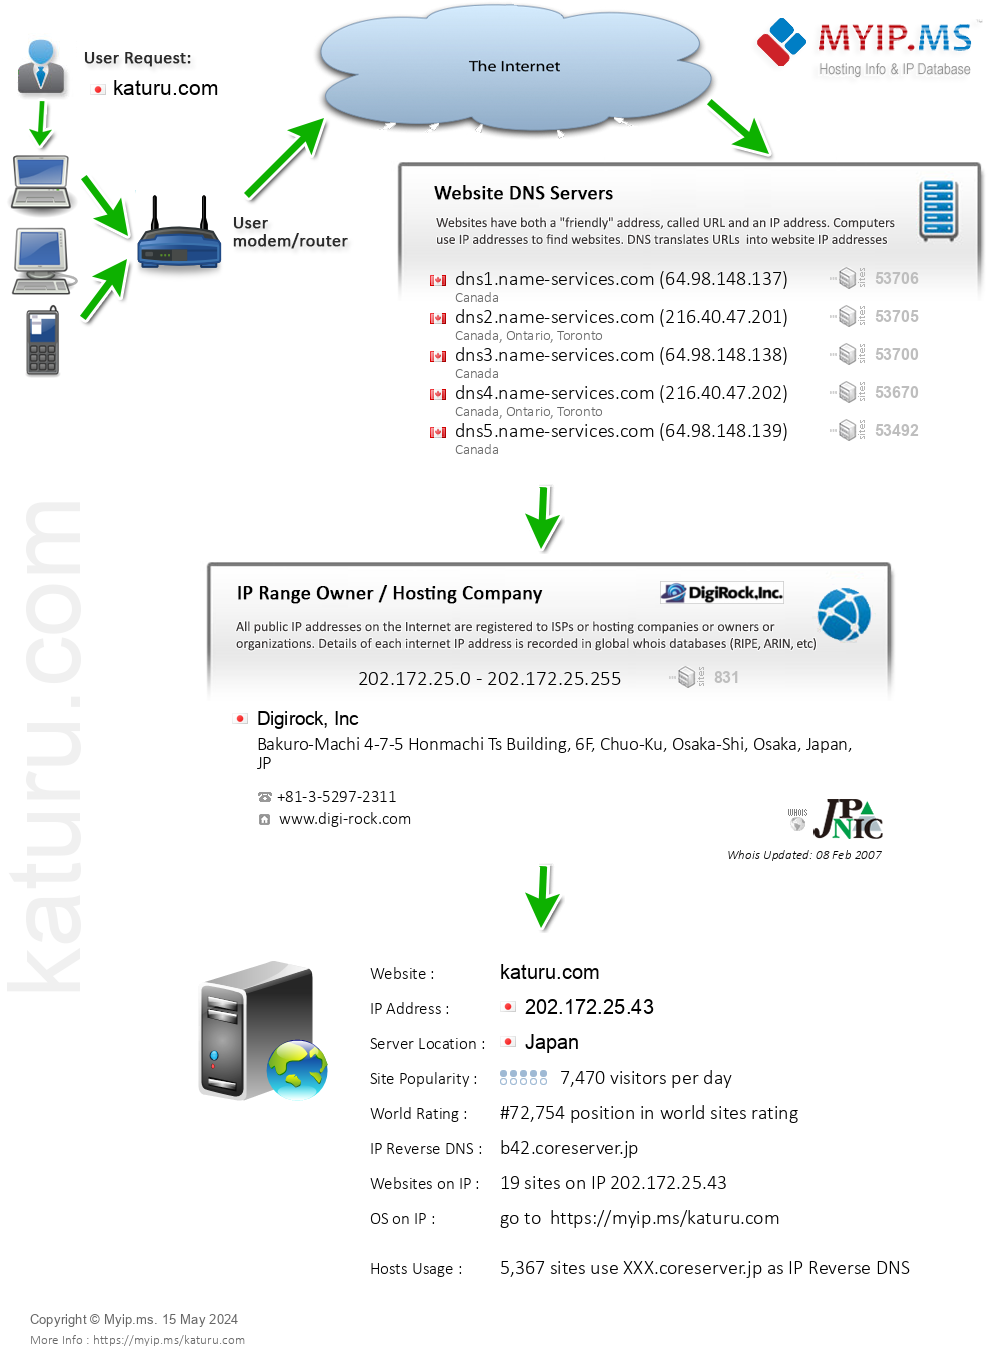 Katuru.com - Website Hosting Visual IP Diagram